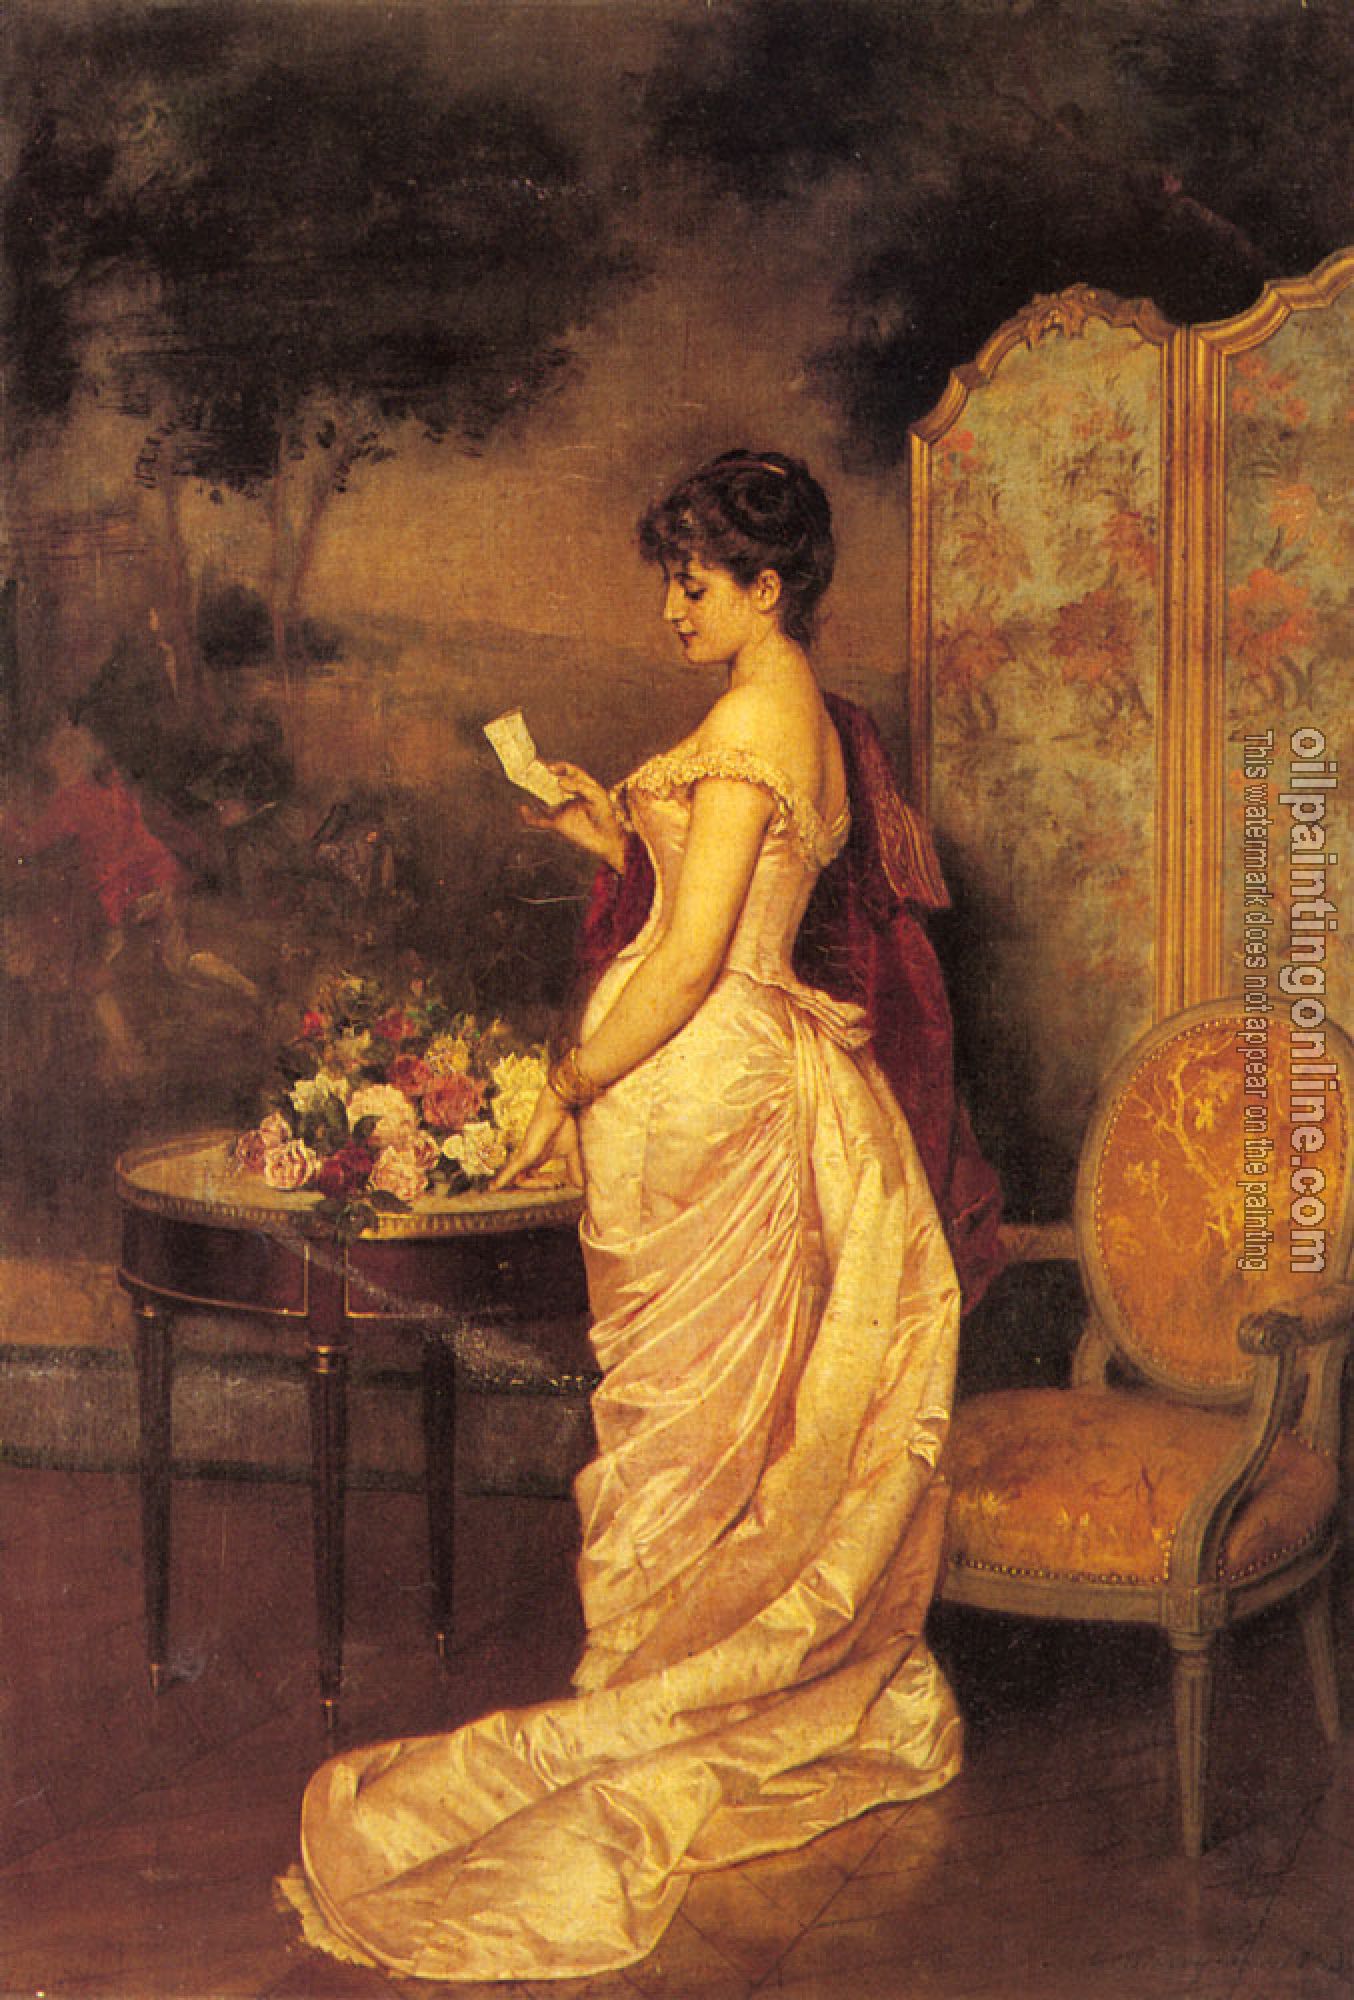 Toulmouche, Auguste - The Love Letter